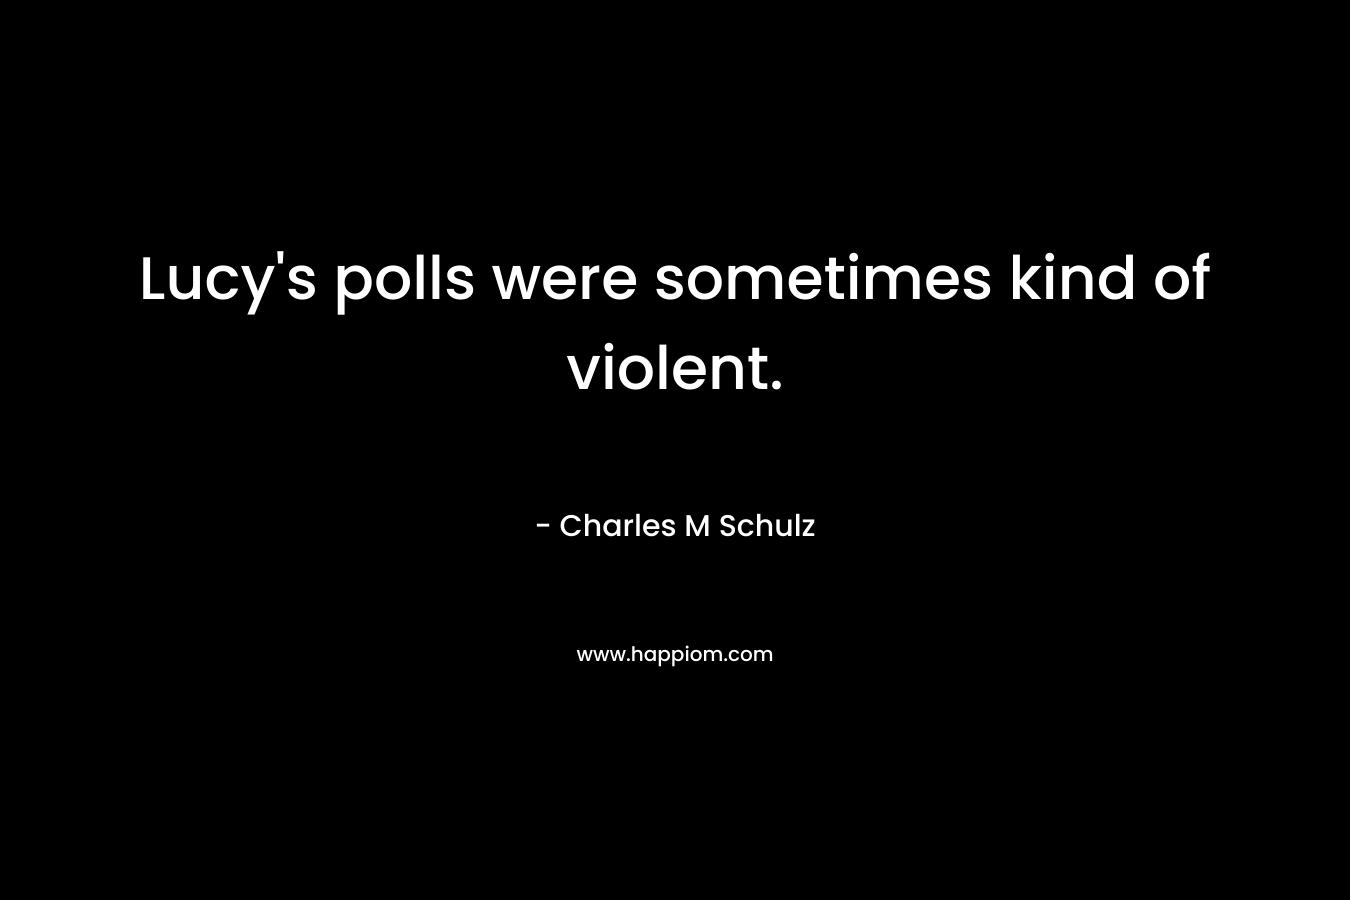 Lucy's polls were sometimes kind of violent.